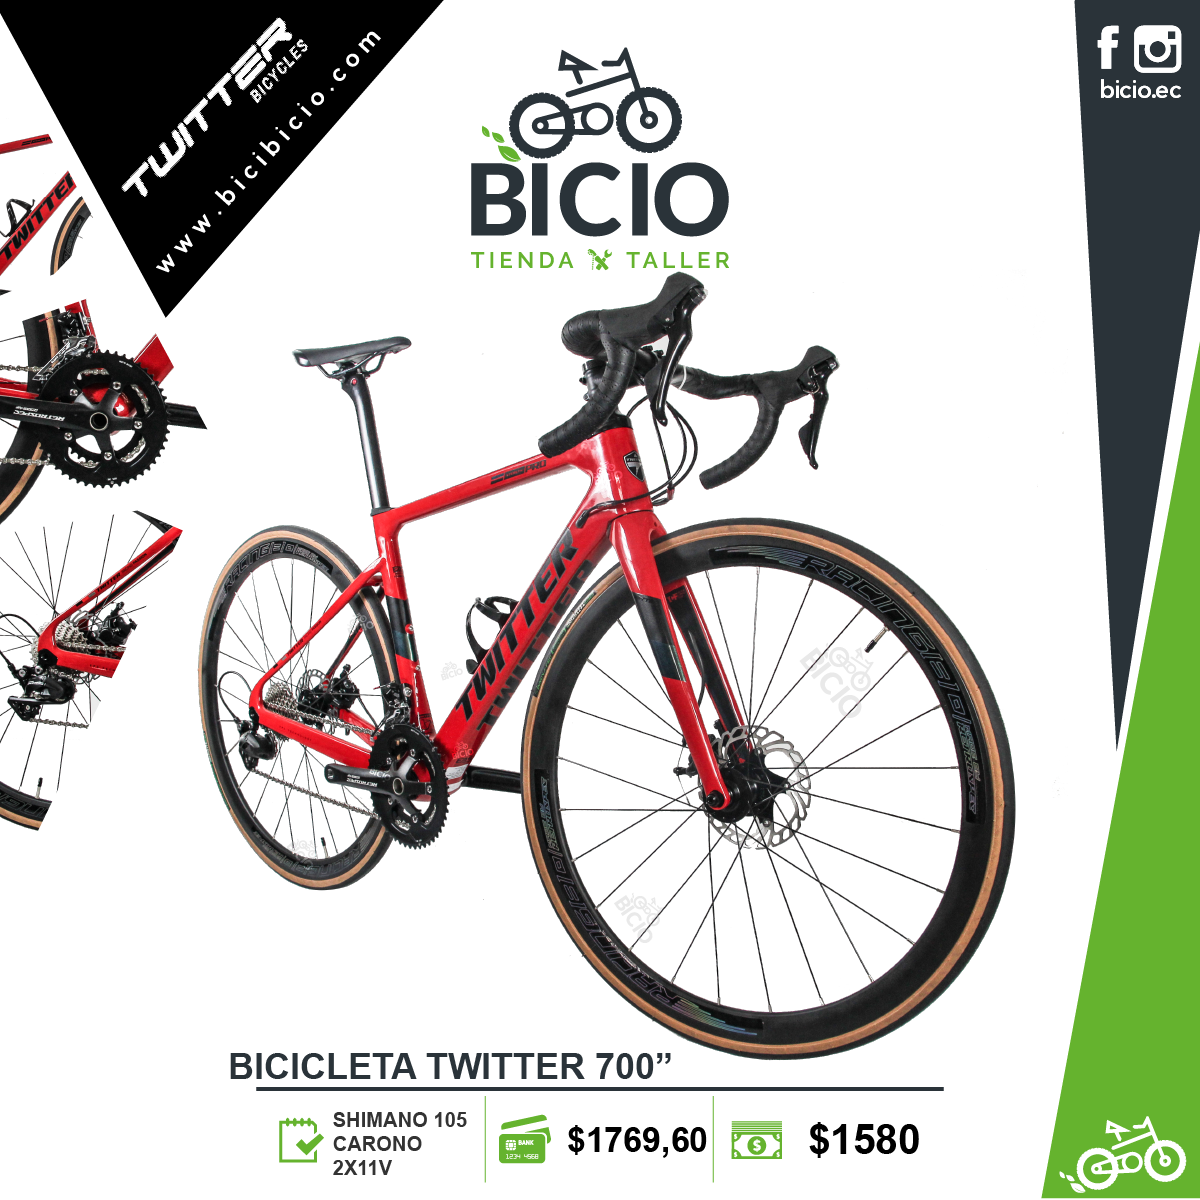 Bicicleta Twitter SHIMANO 105 2X11 - Bicio tienda - taller bicicletas